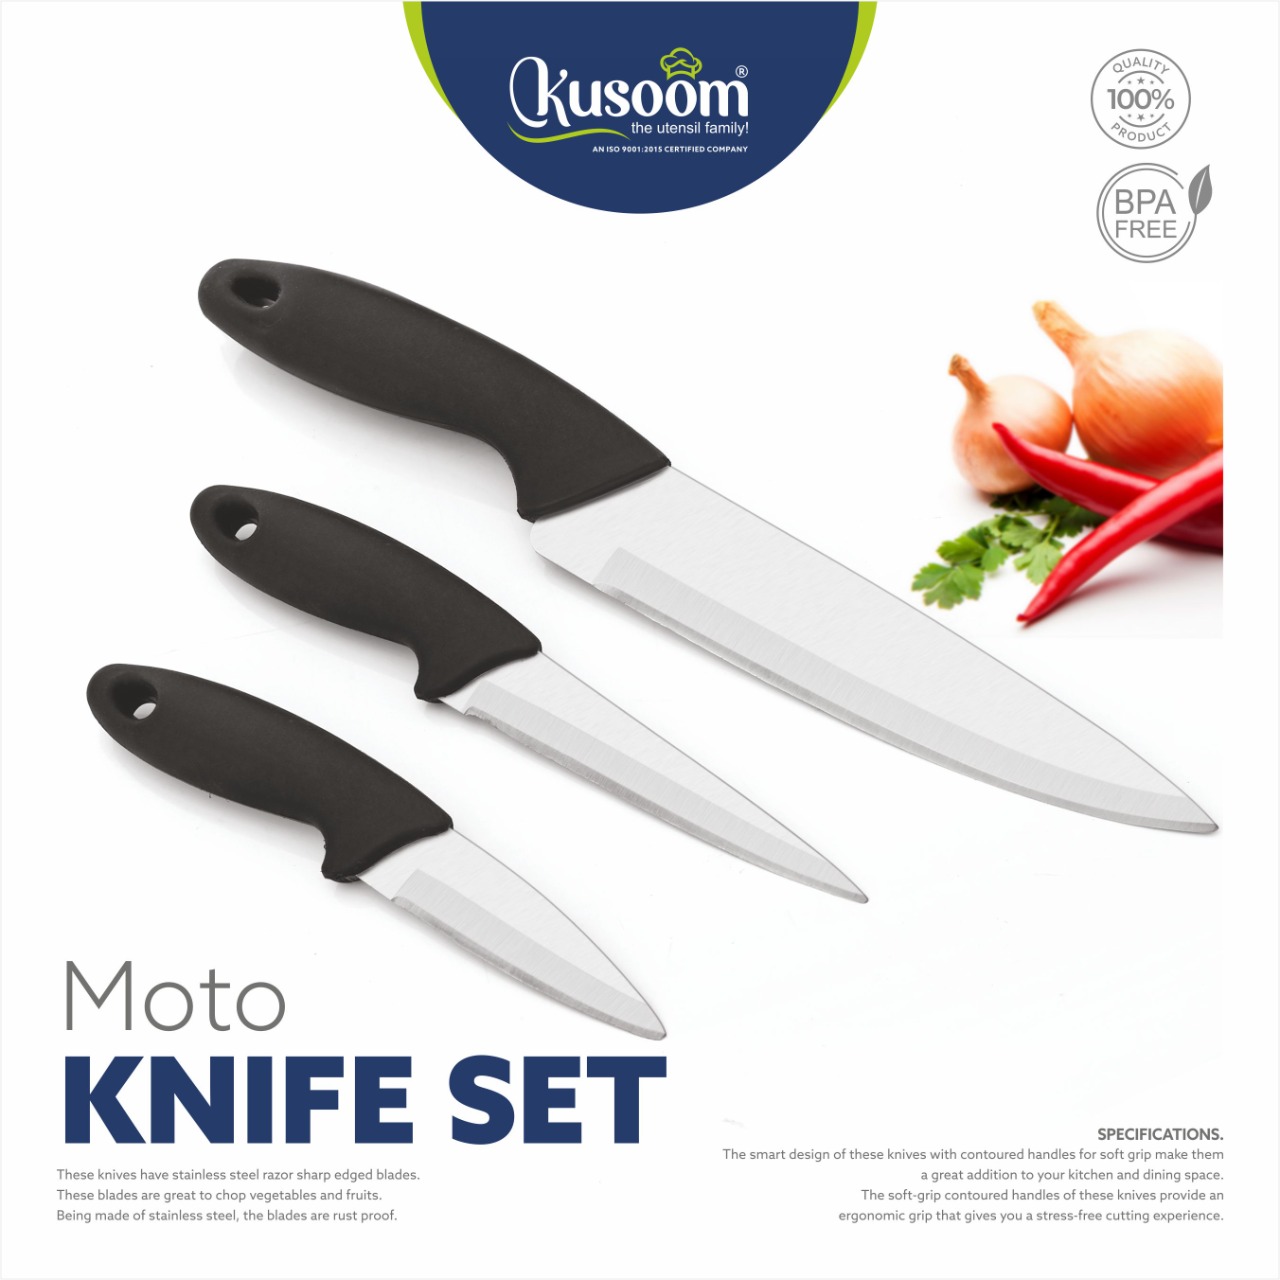 Kusoom kitchen knife set